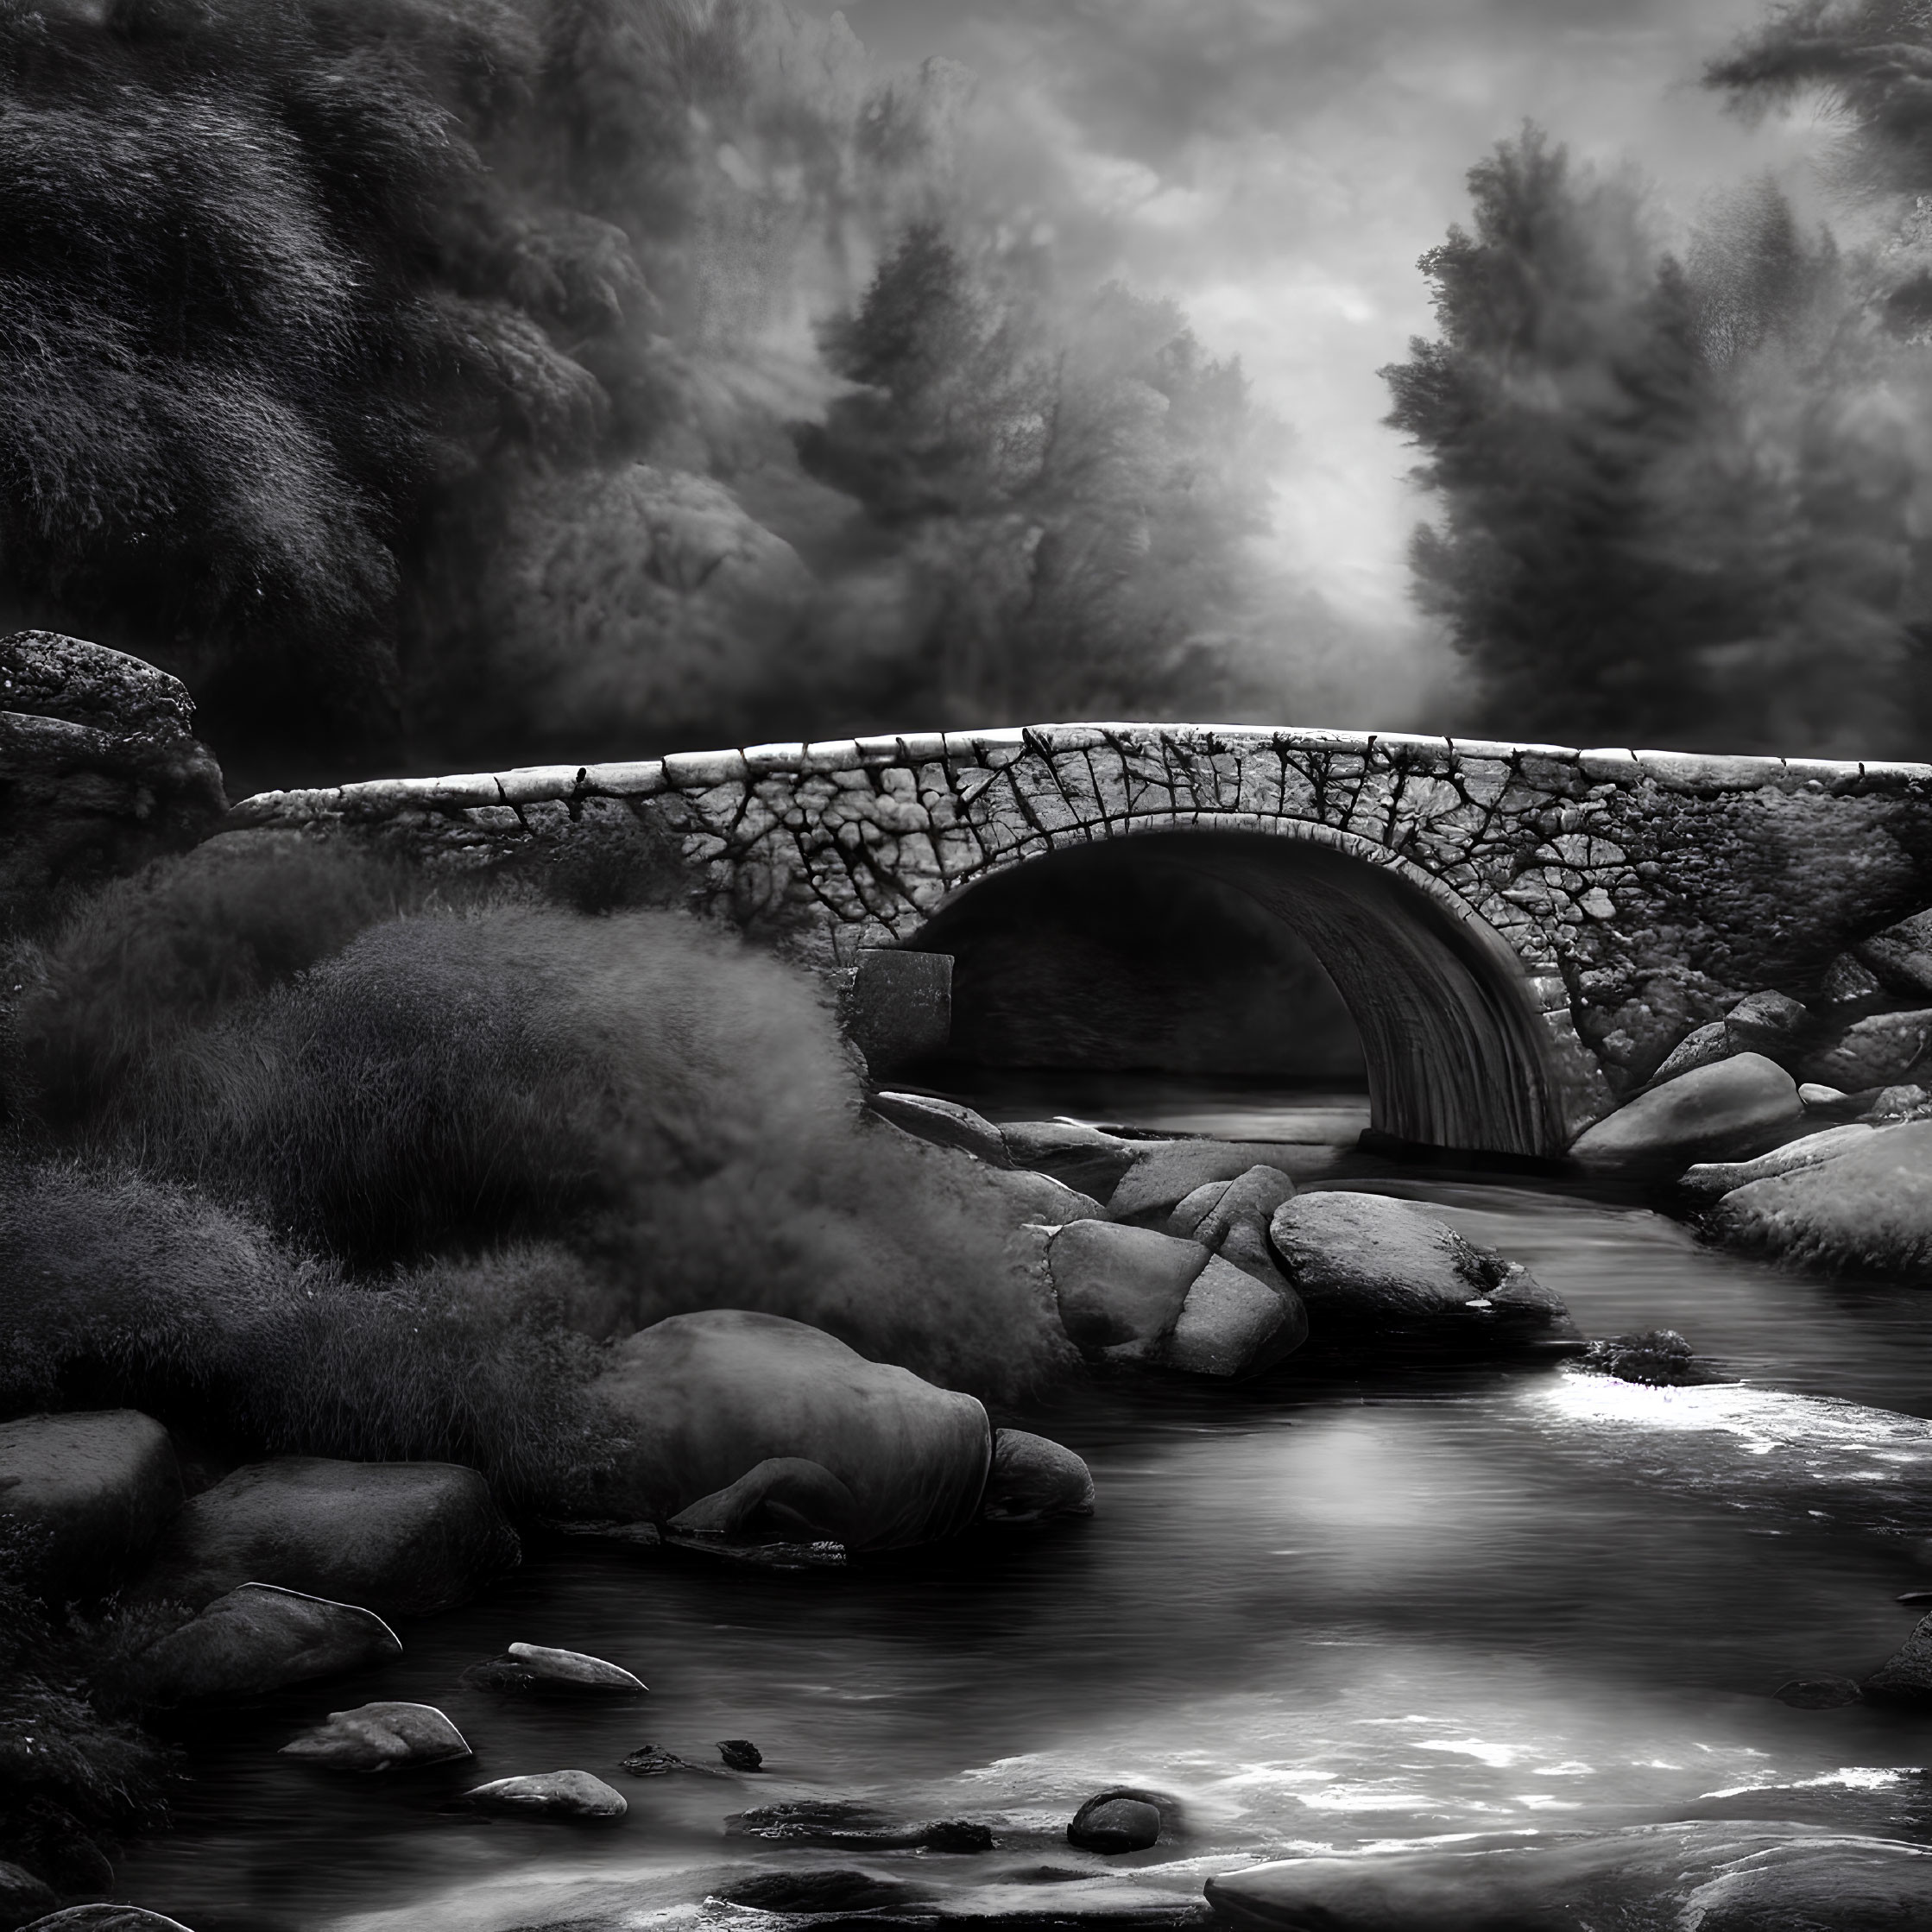 Monochrome photo of stream under stone arch bridge in misty woods